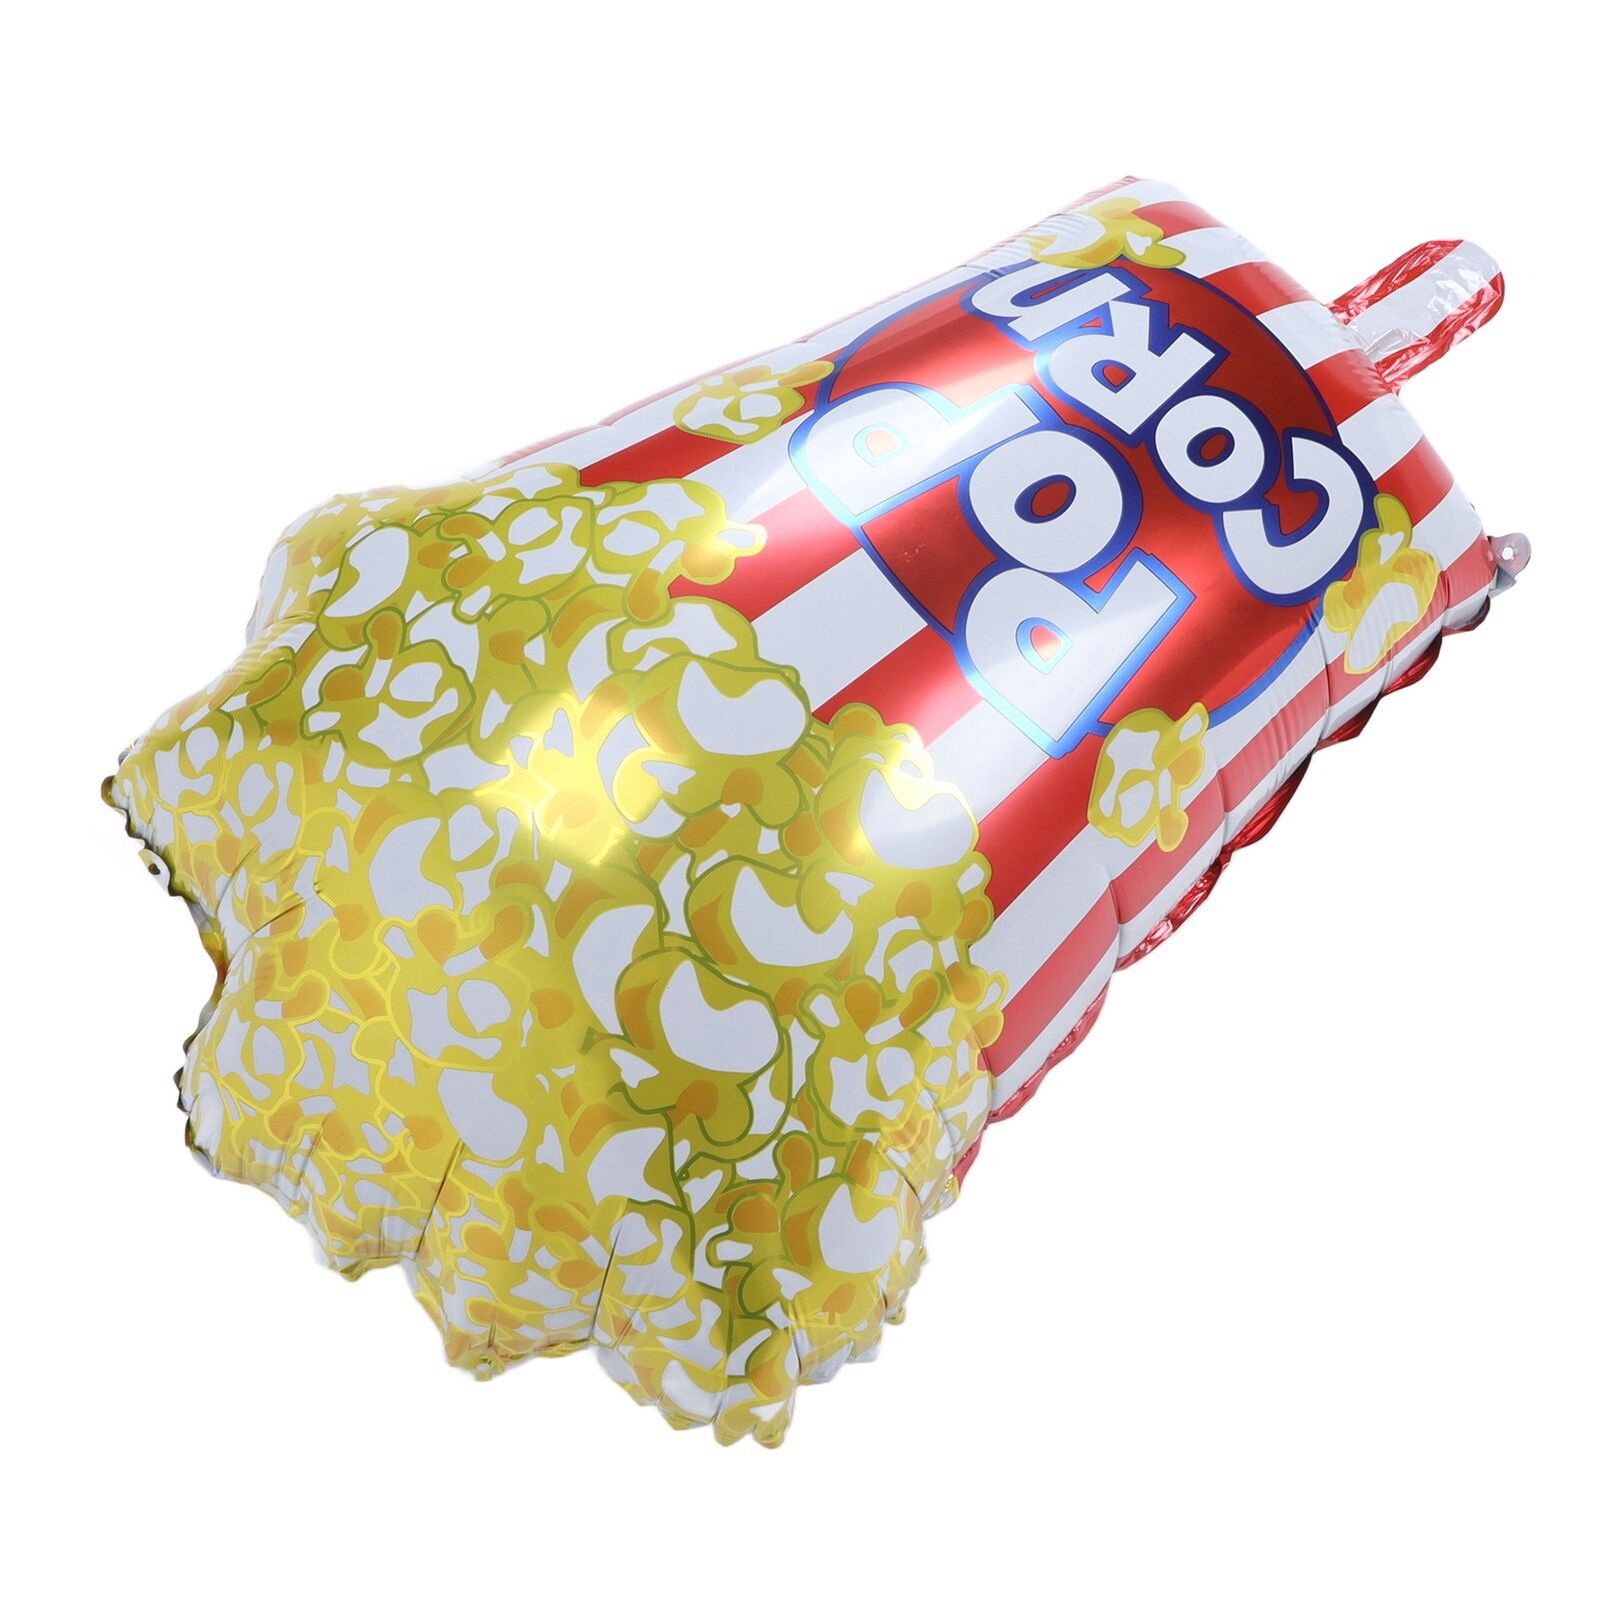 10pcs Popcorn Party Balloons Reusable Movie Theme Party Balloons Decor Gift DSO